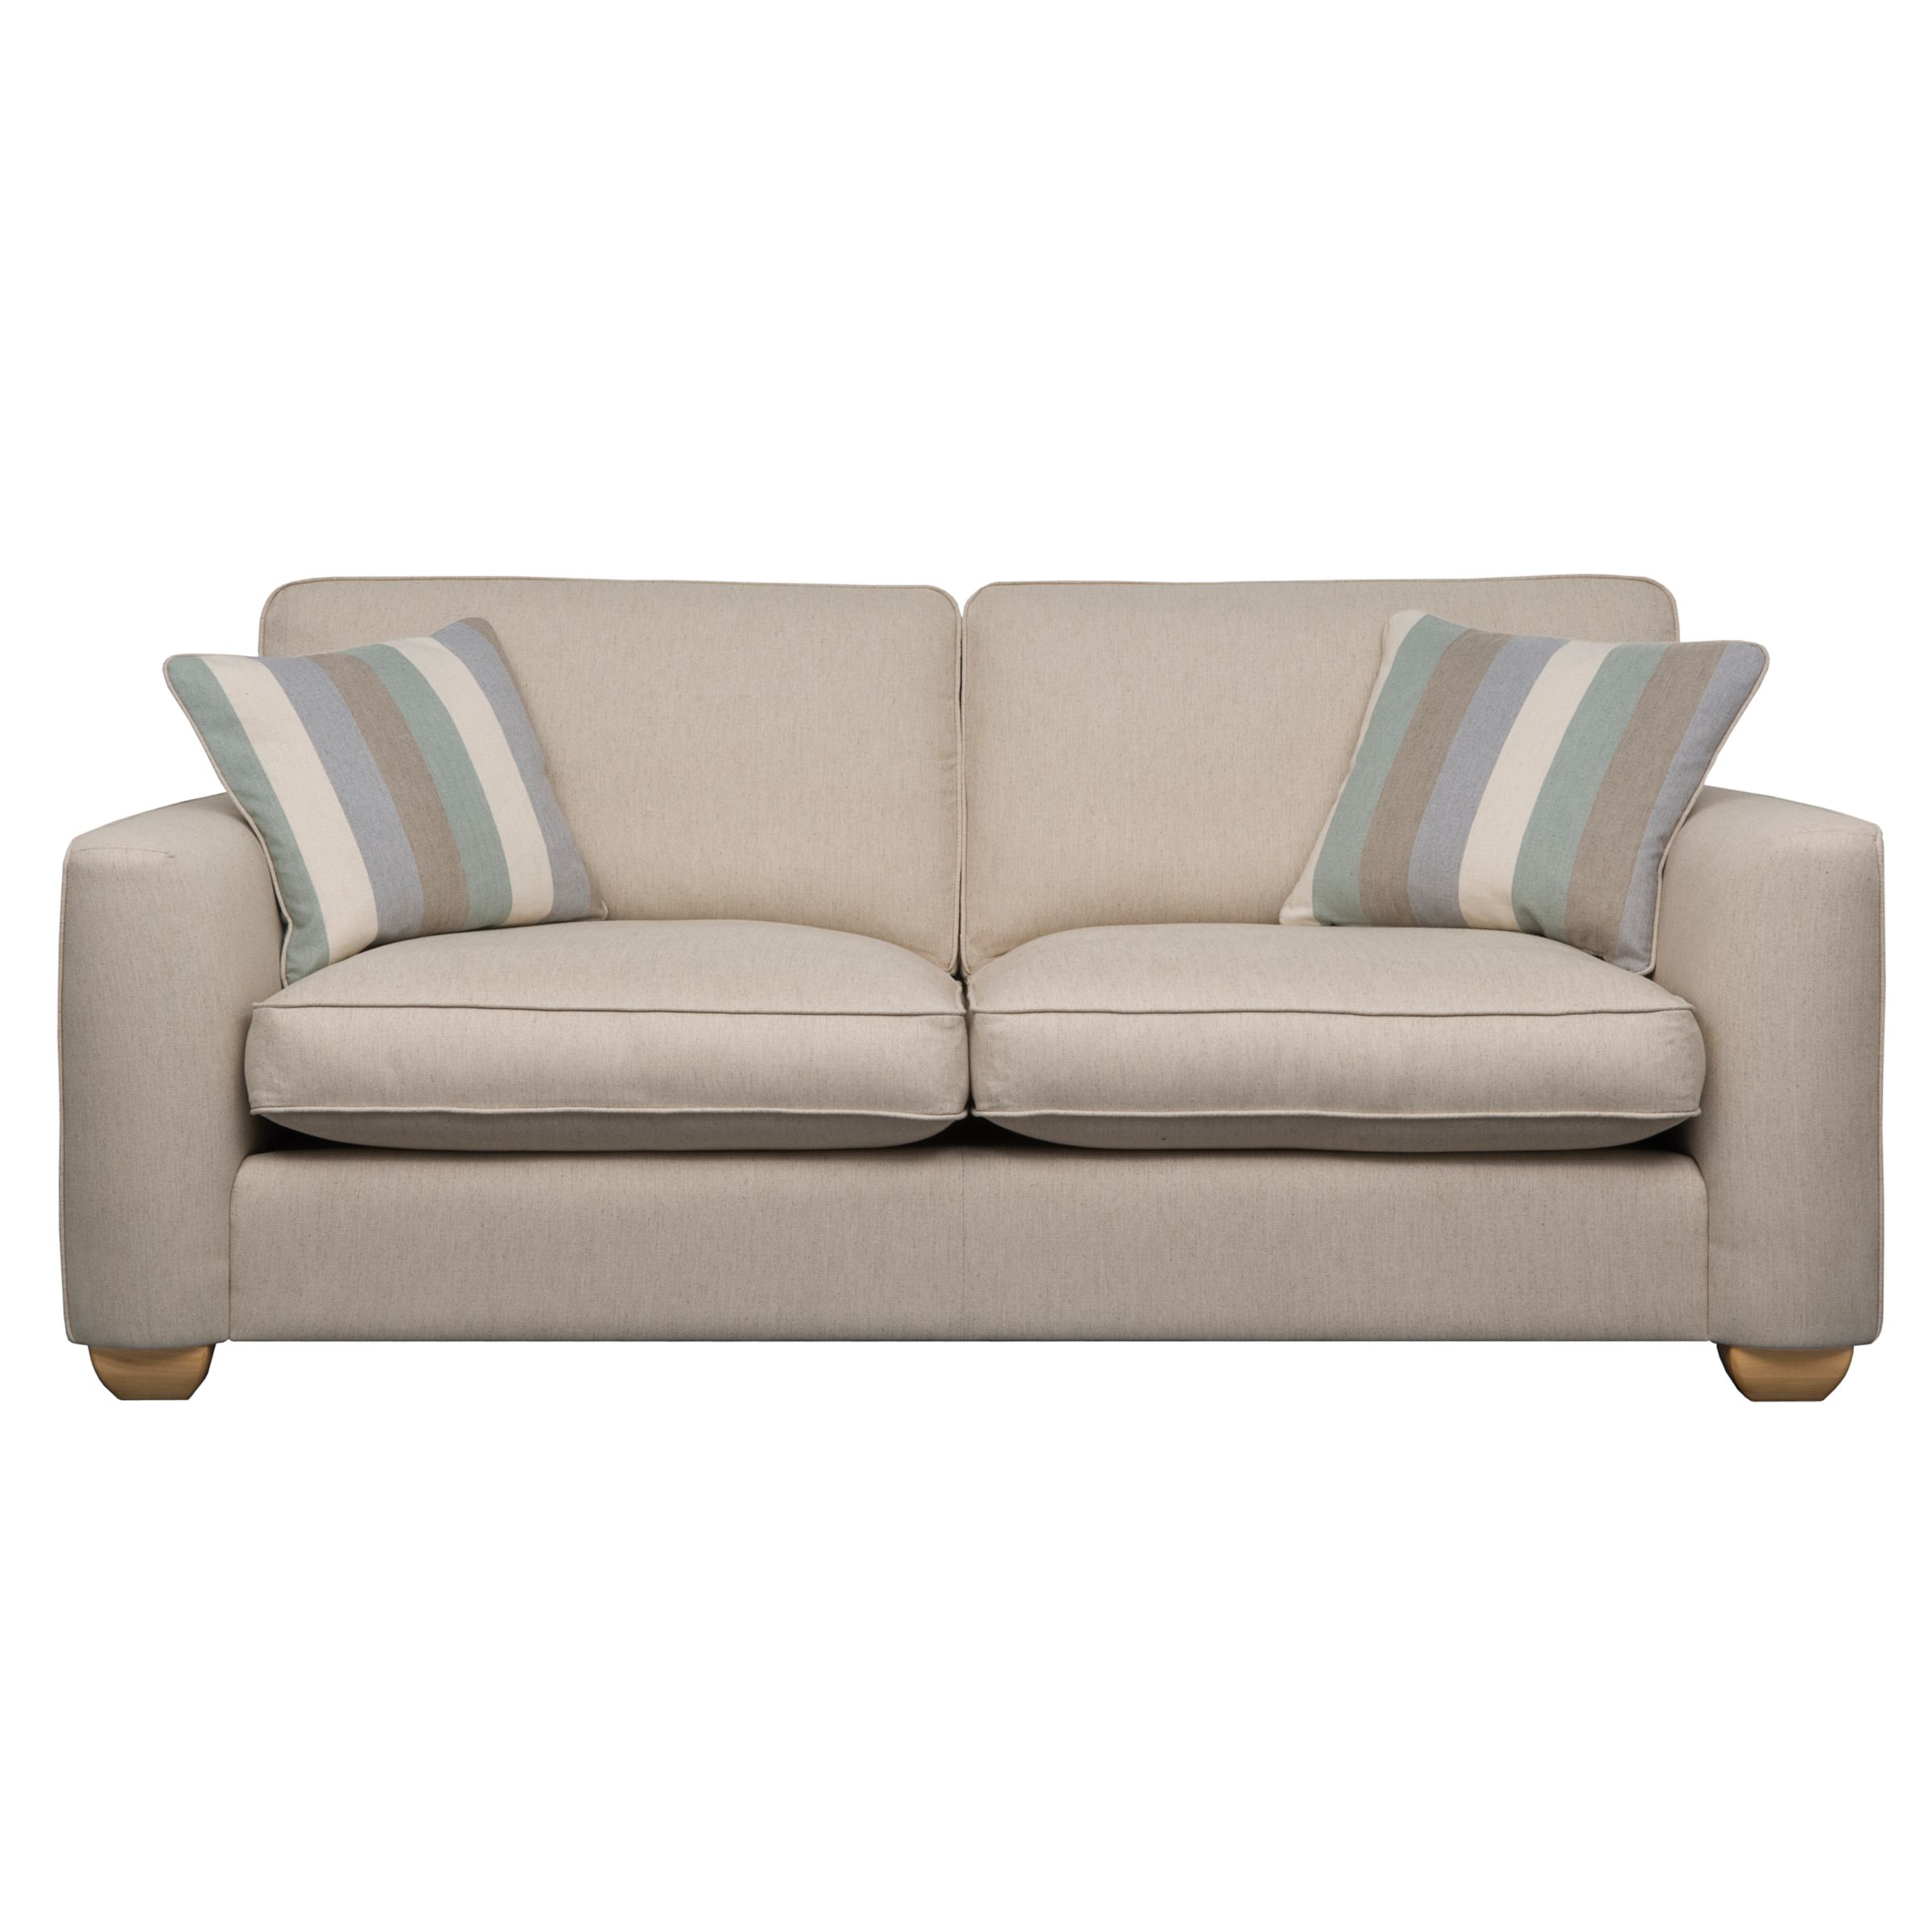 John Lewis Walton Large Sofa, Beige, width 200cm